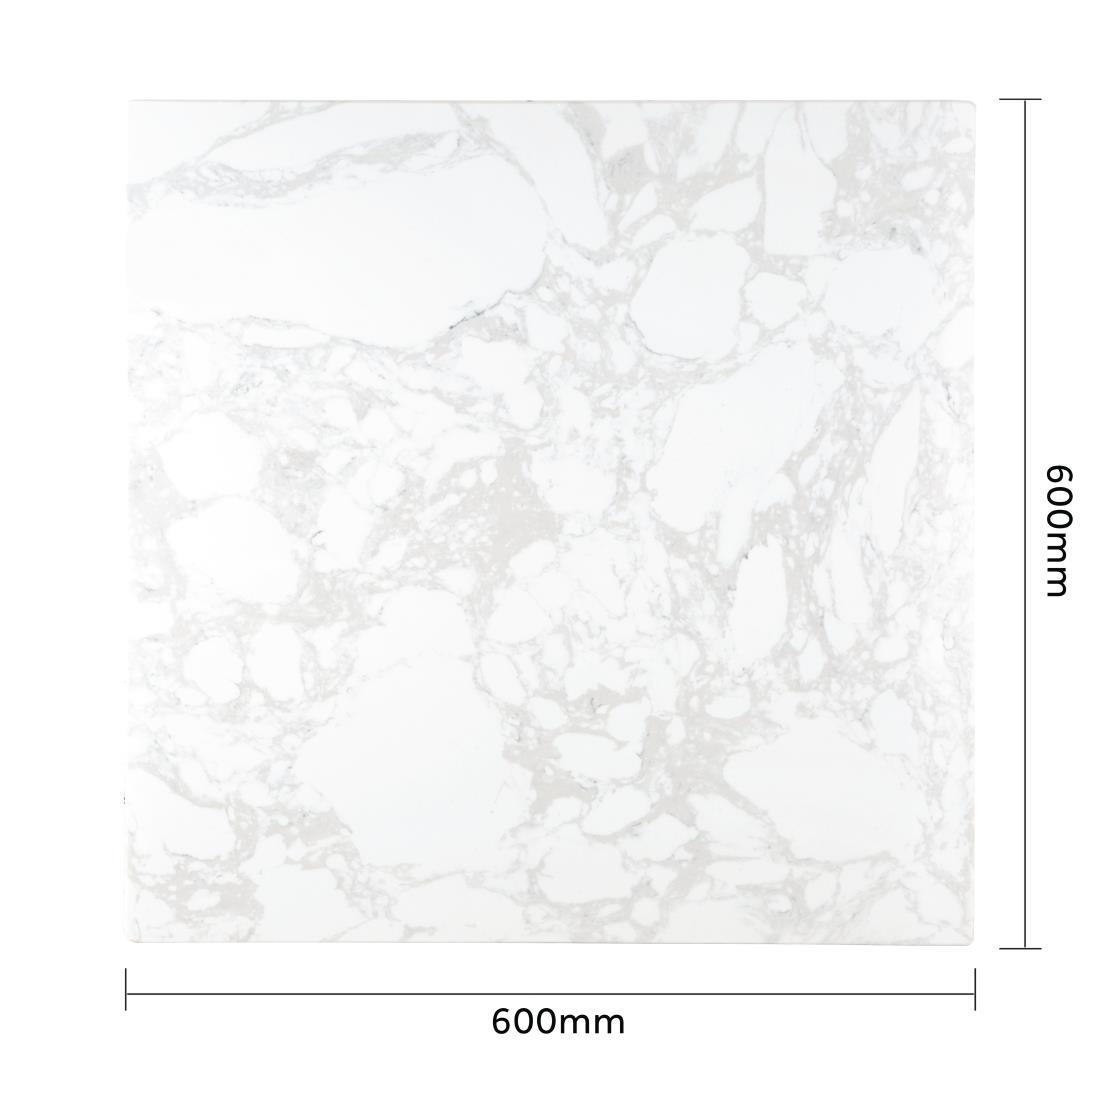 Bolero Square Marble Effect Table Top White 600mm - DC301  - 5